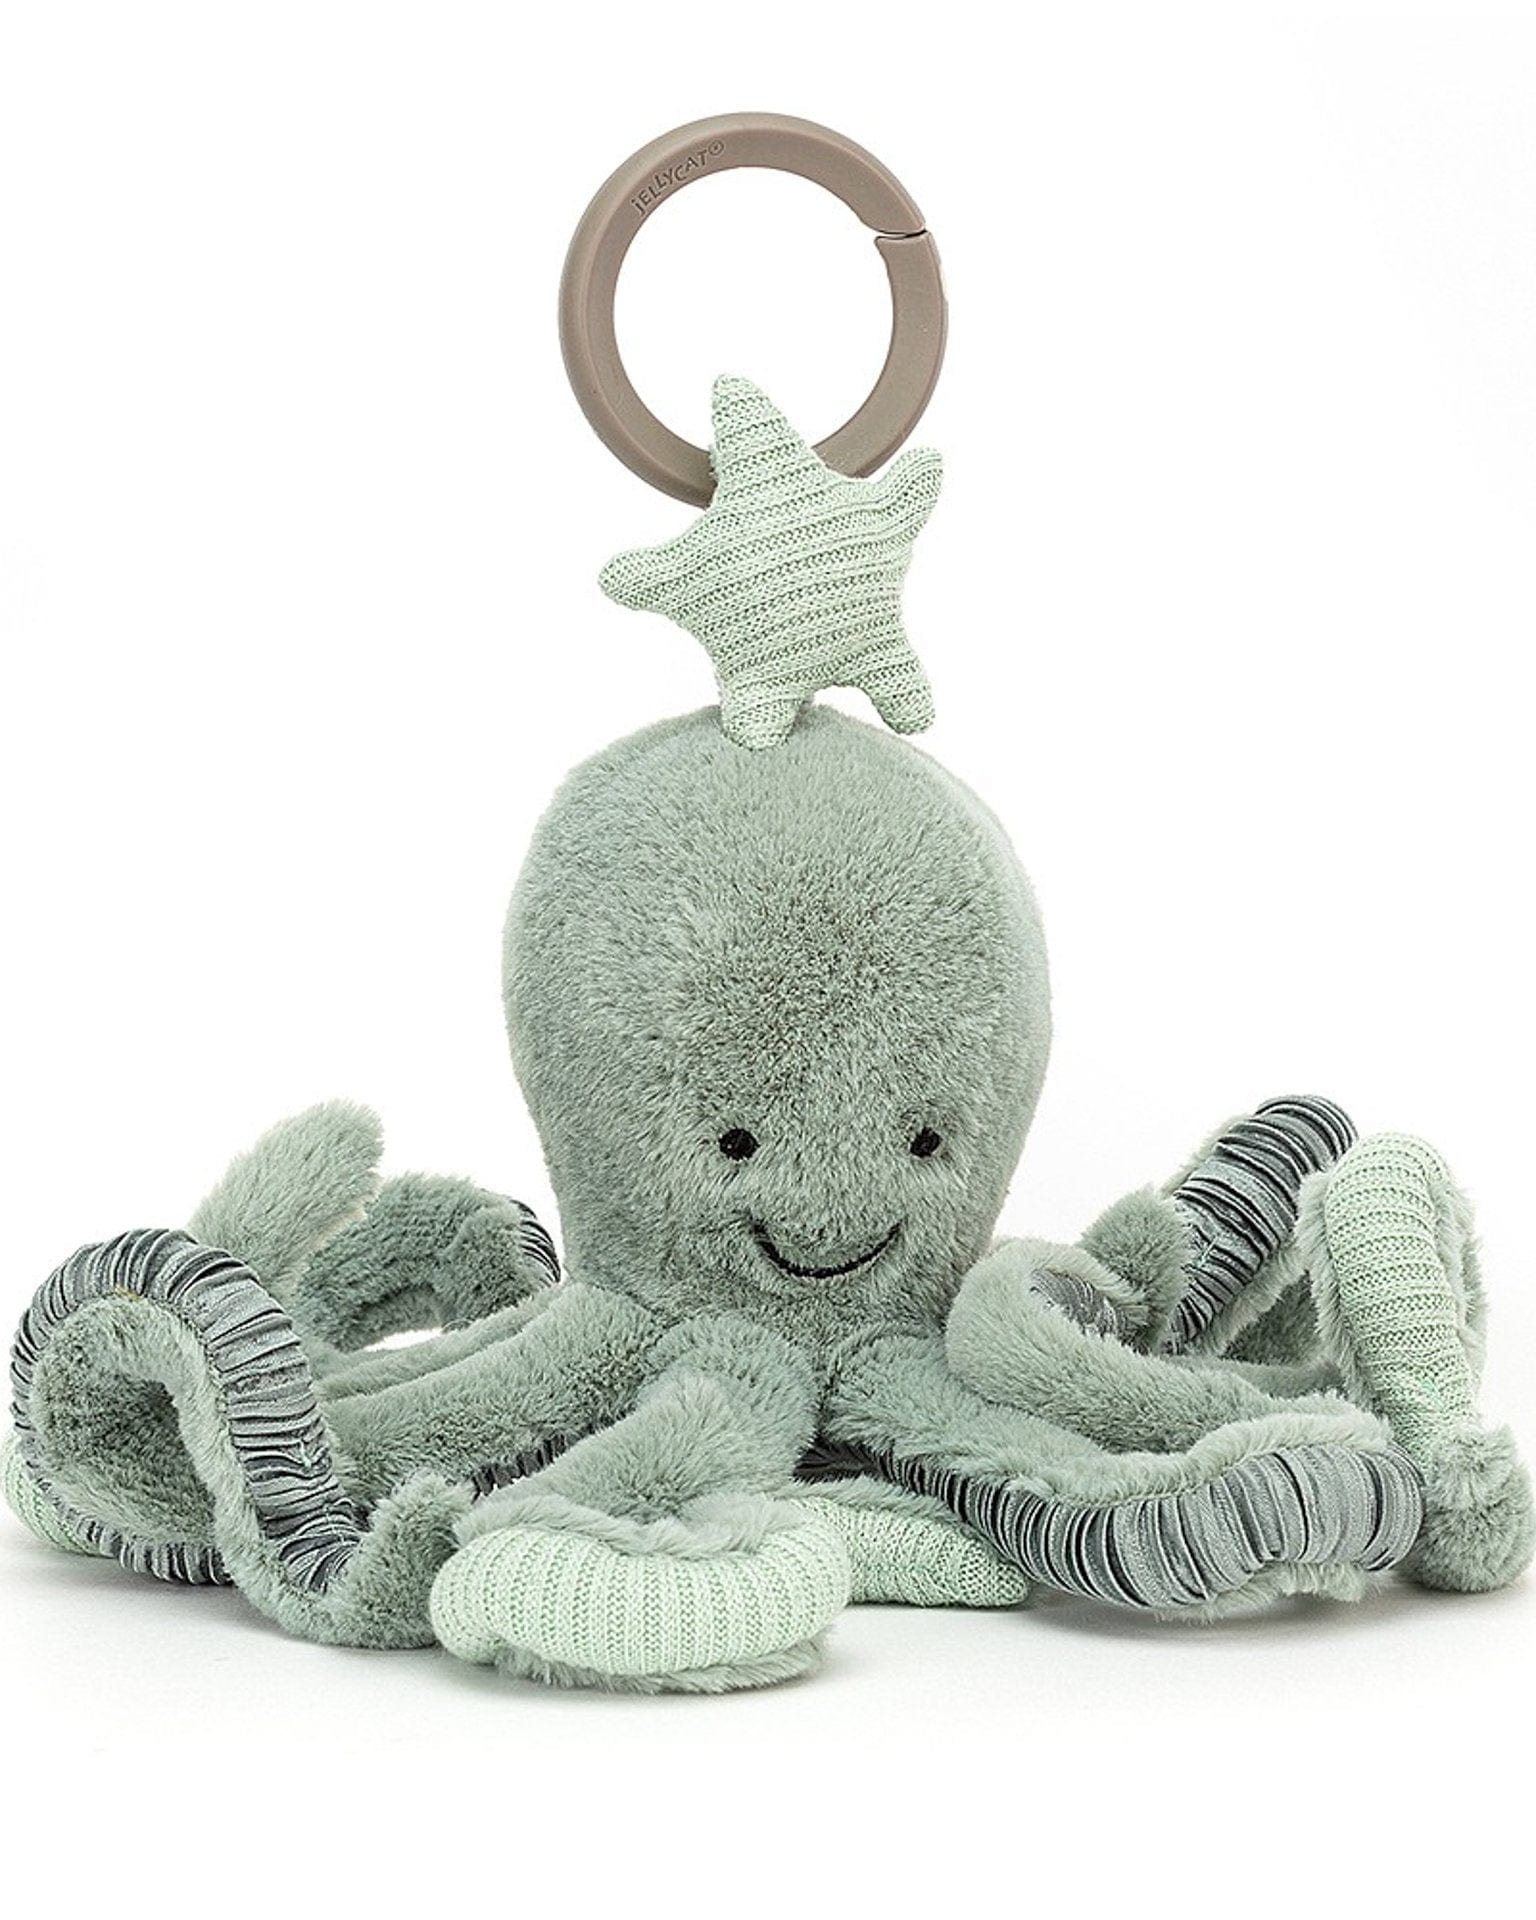 odyssey octopus activity toy